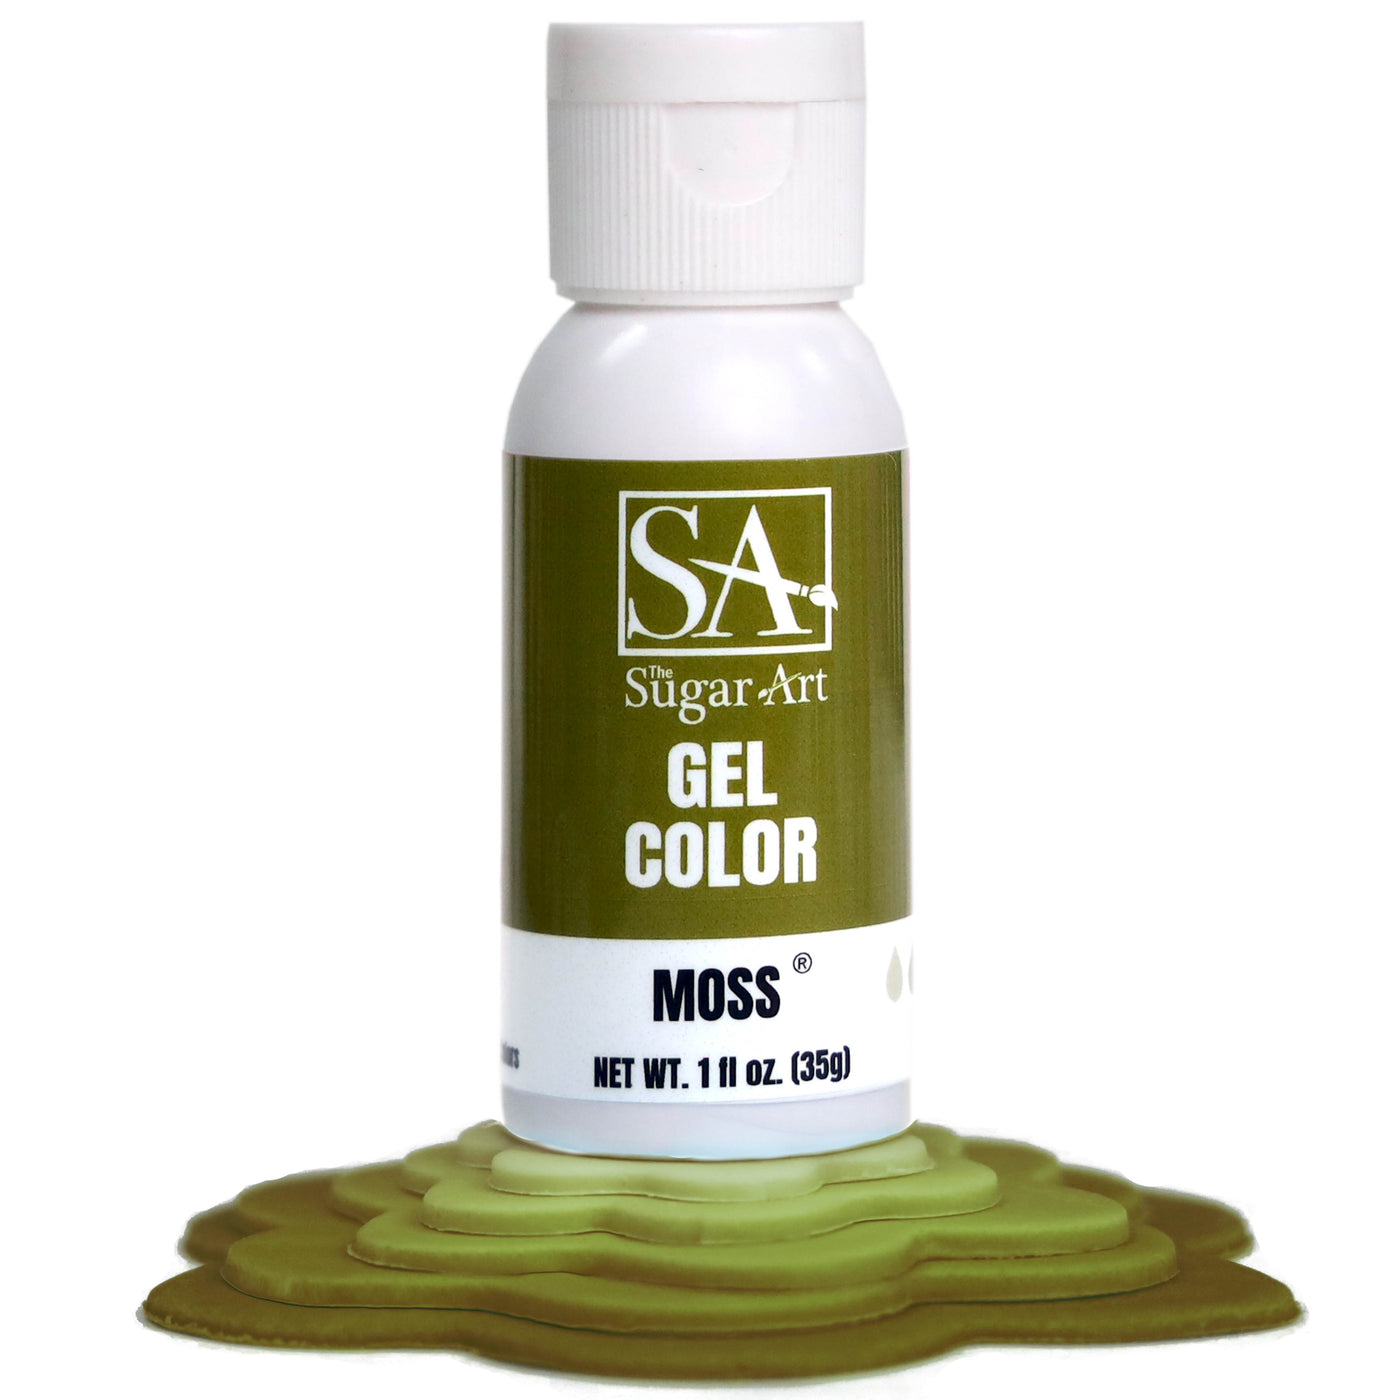 Moss Gel Color - The Sugar Art, Inc.